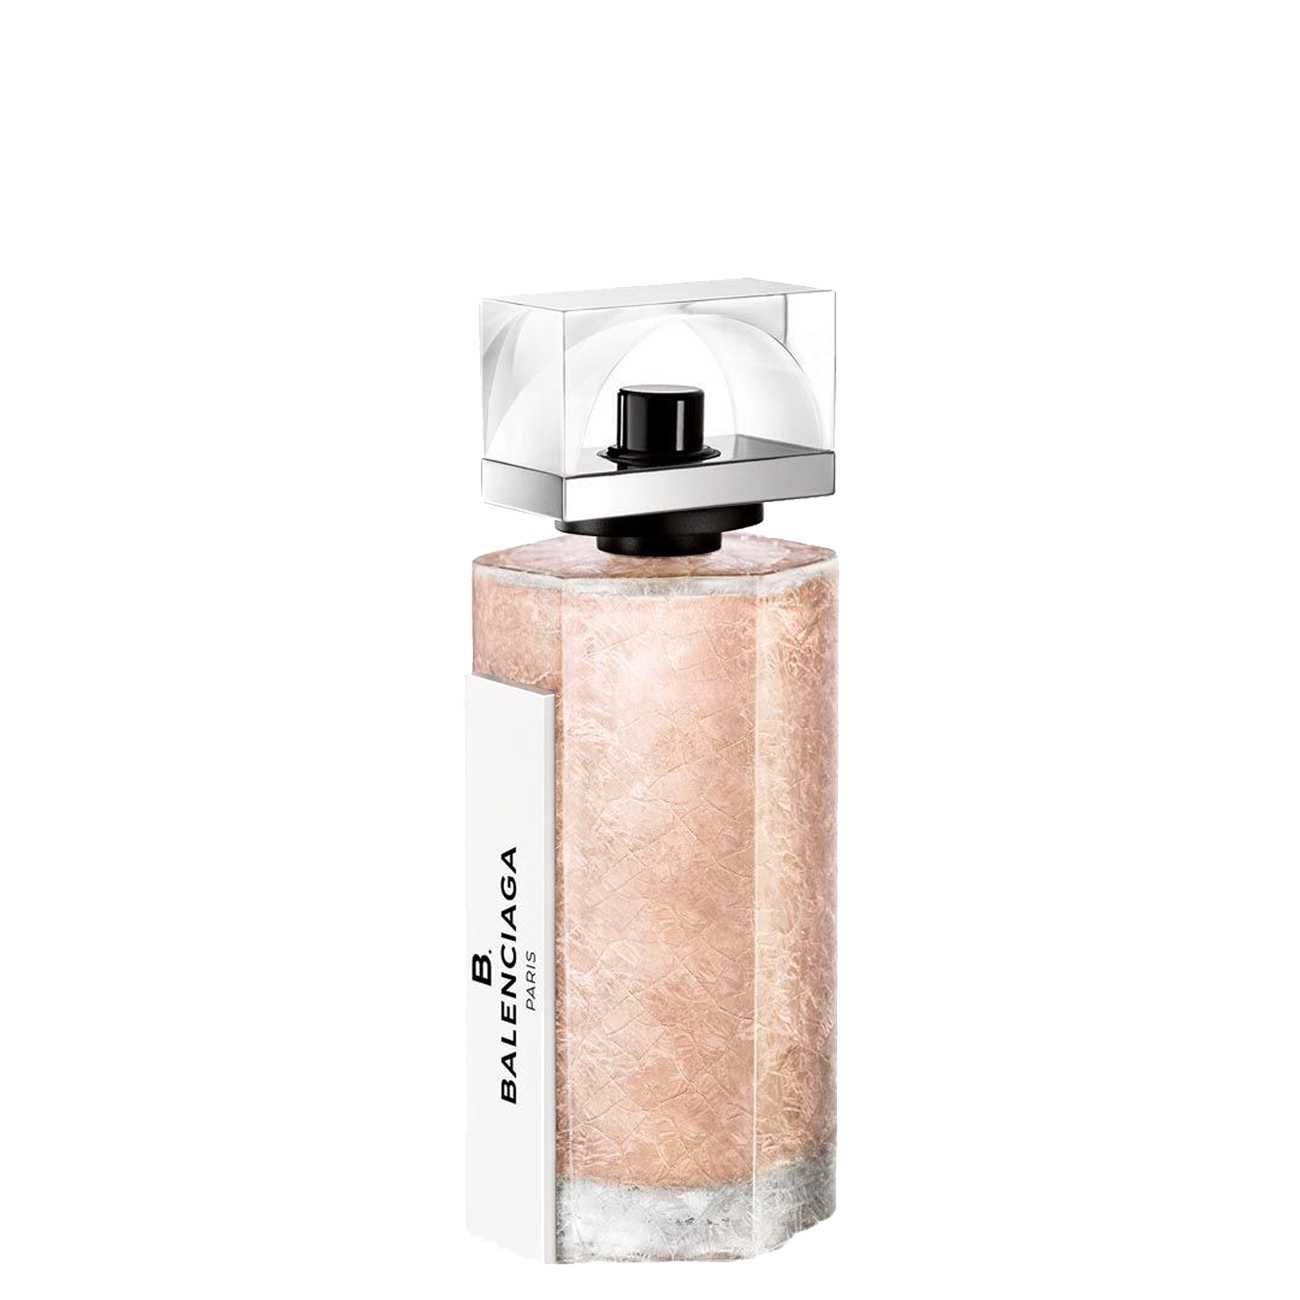 Apa de Parfum Balenciaga "B" 75ml cu comanda online